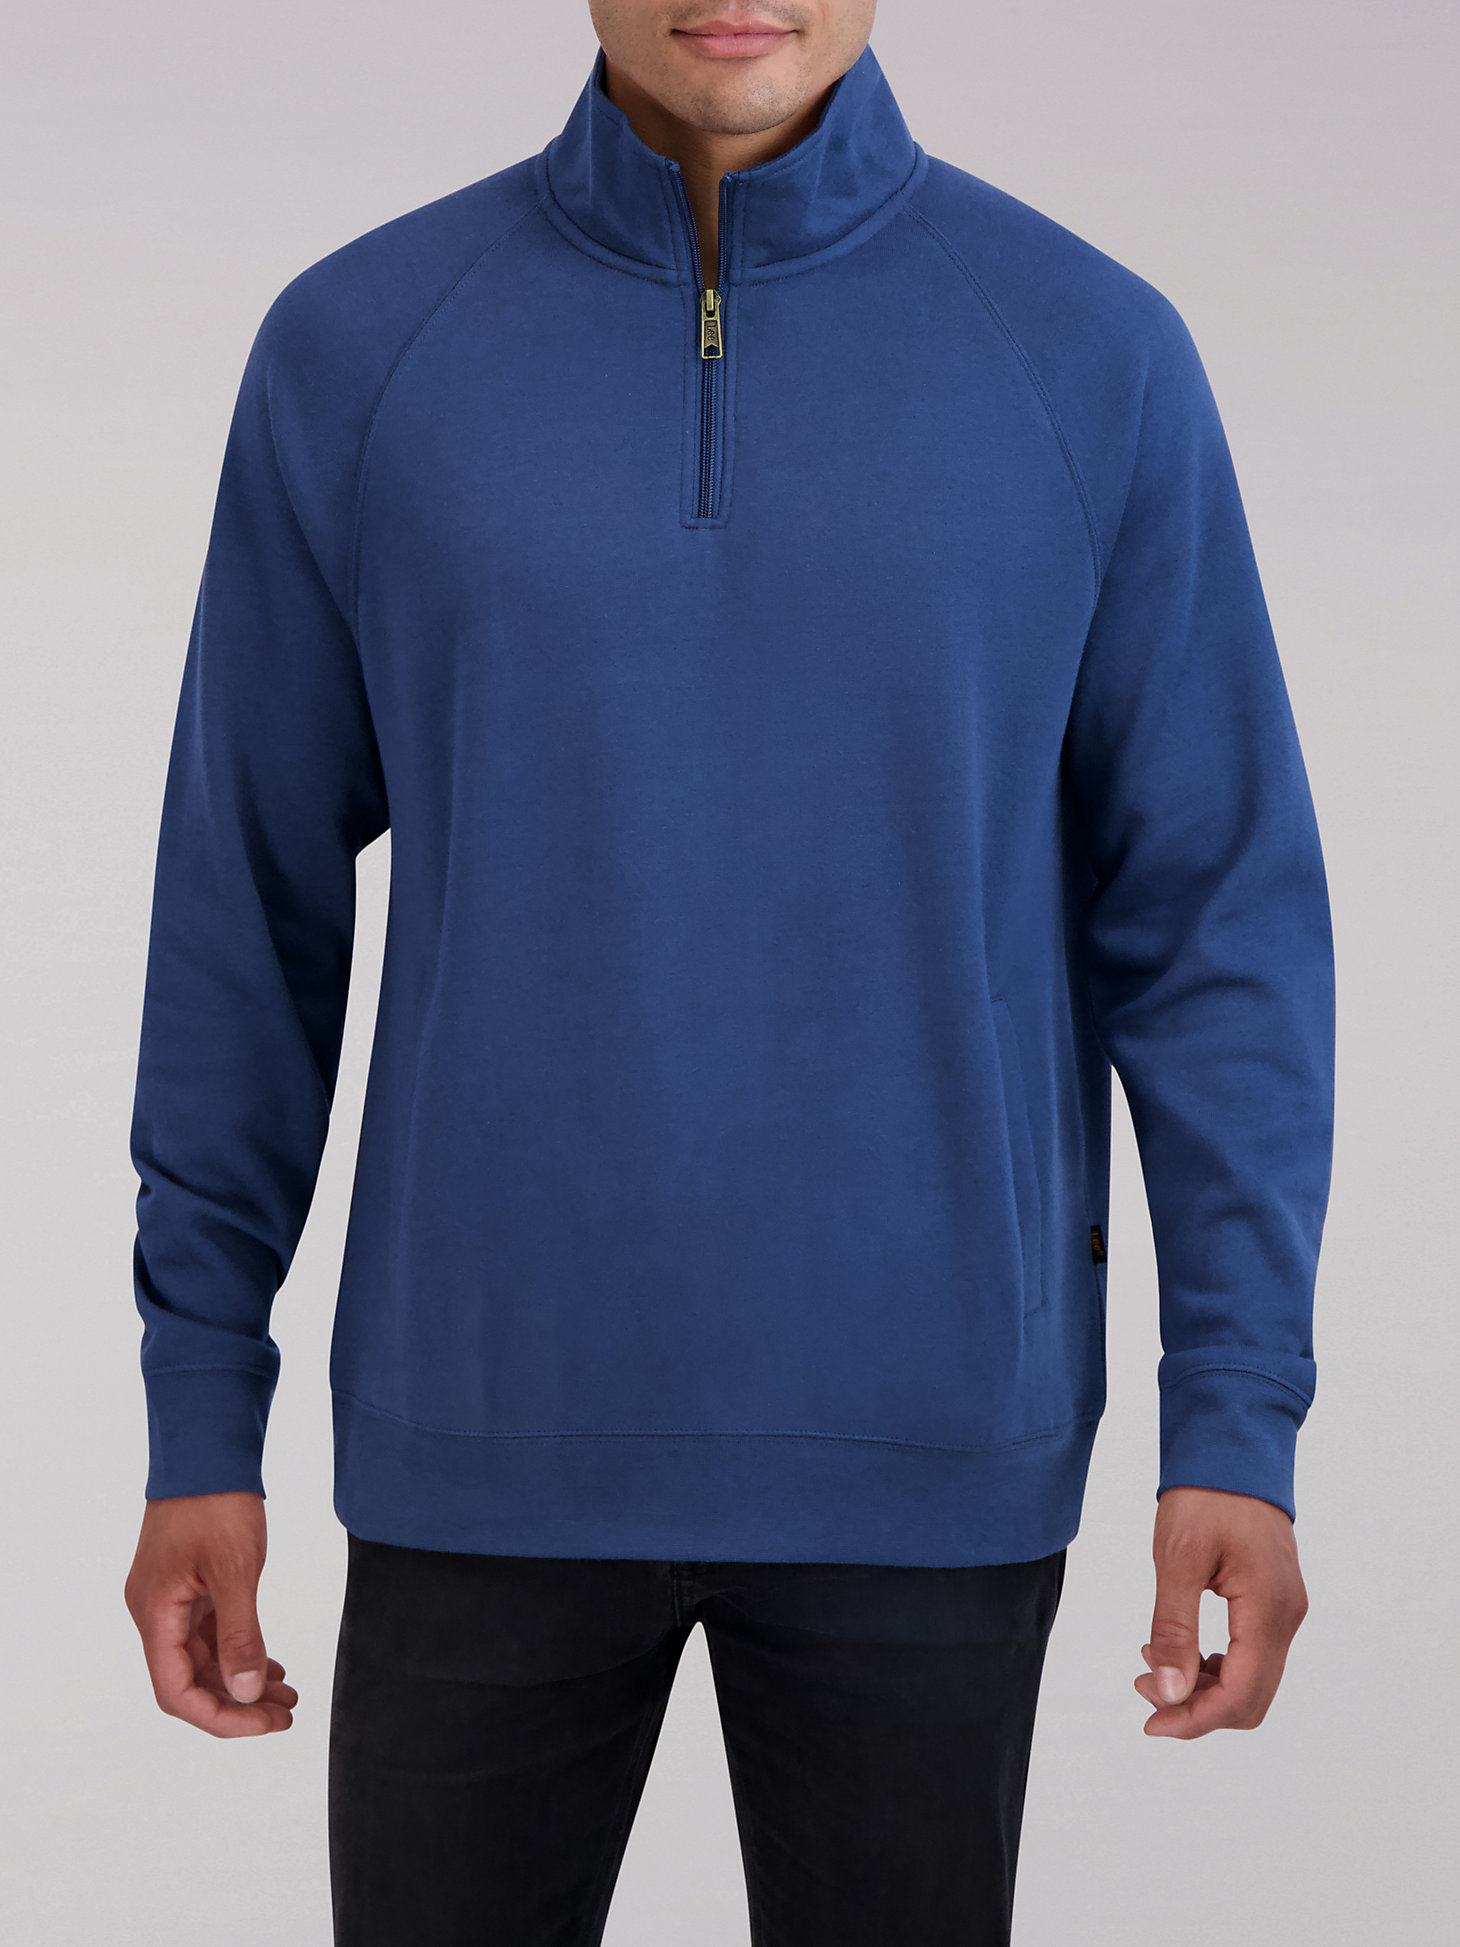 Men's Heavyweight Fleece Quarter Zip Sweater in Blue Denim main view